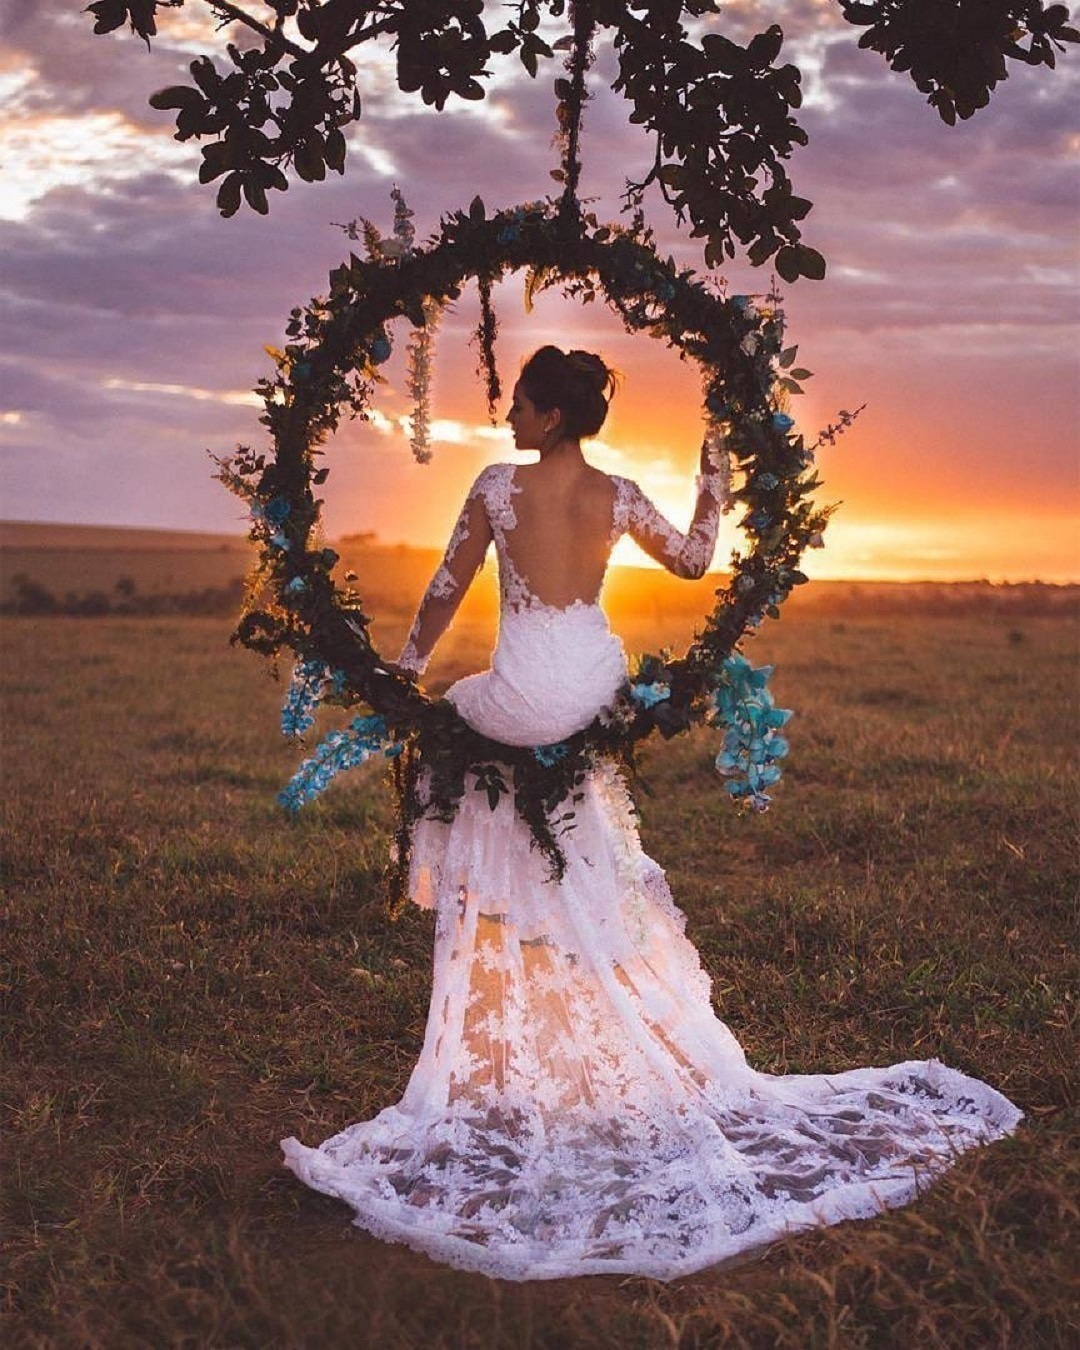 The Perfect Dress (via Instagram)